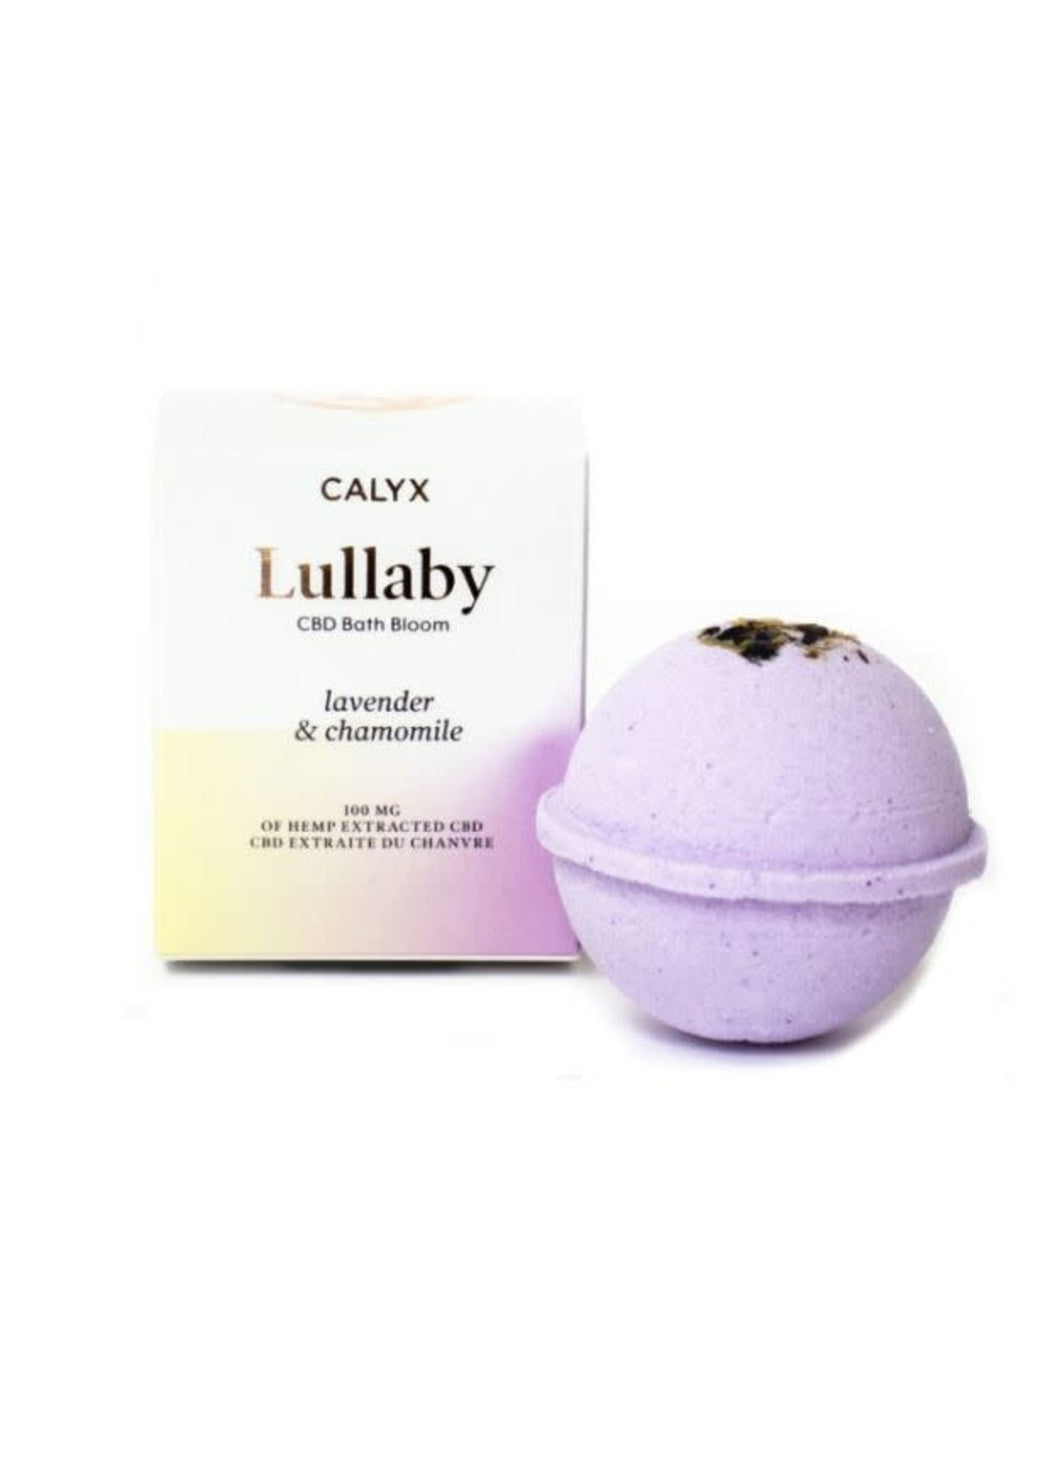 Calyx Bath Bloom Lullaby 100mg CBD 1.25g